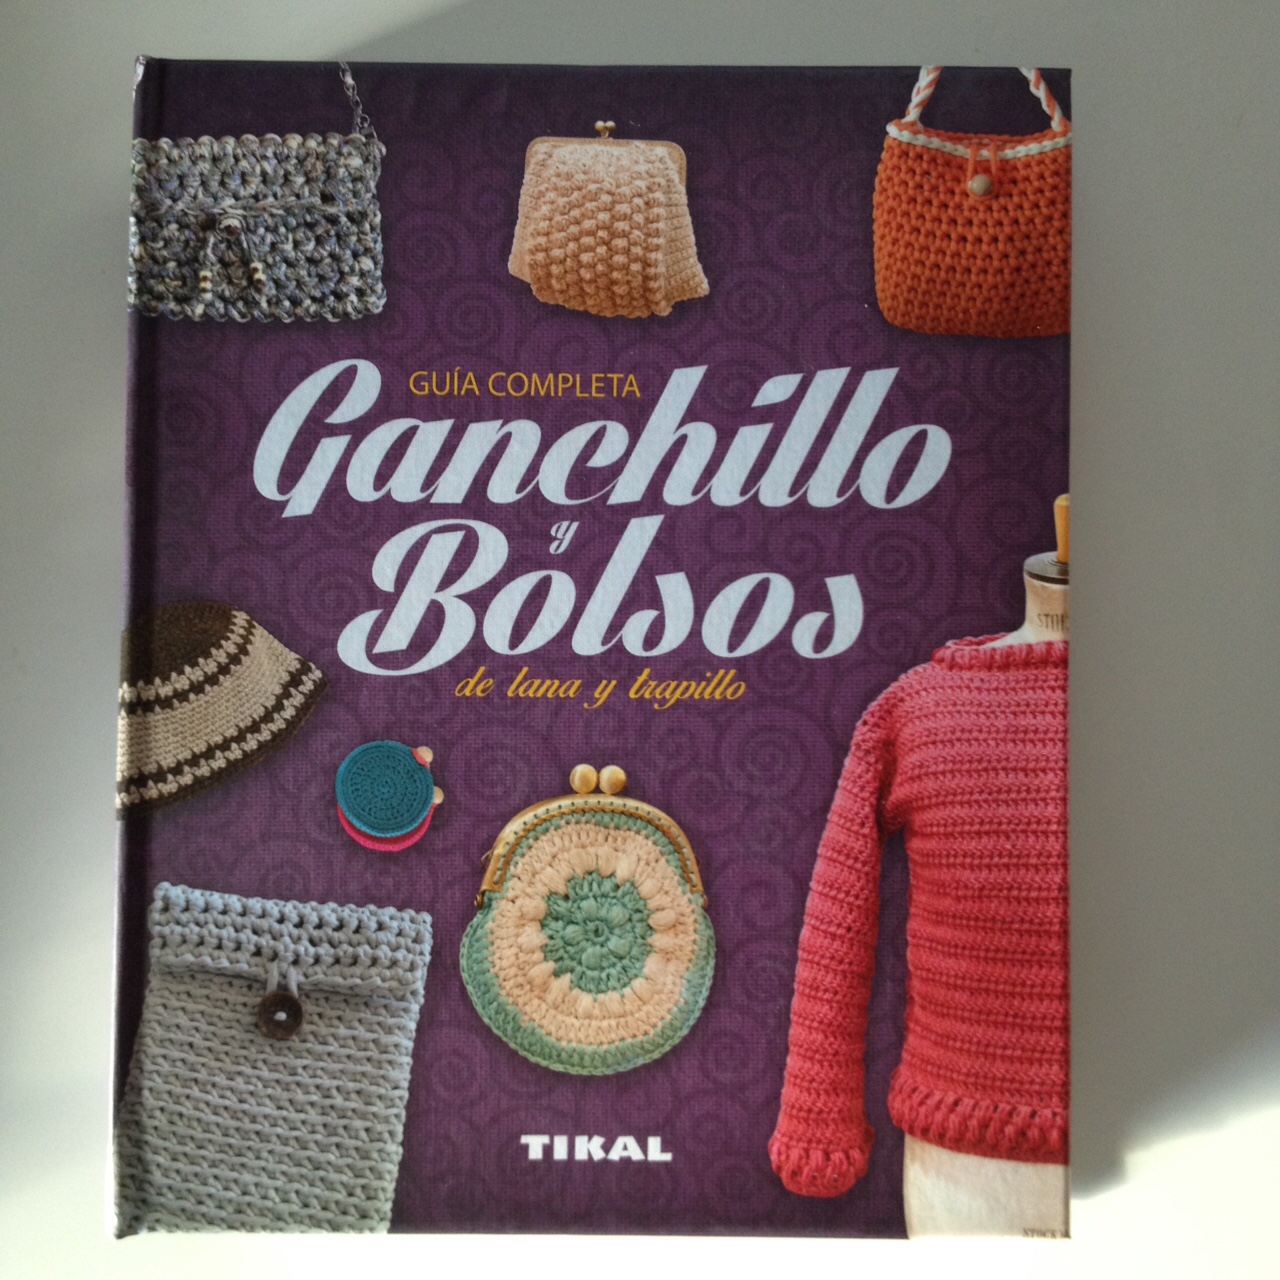 Libro Crochet con Trapillo CLASA  Libros para tejer – Entre Lanas Perú